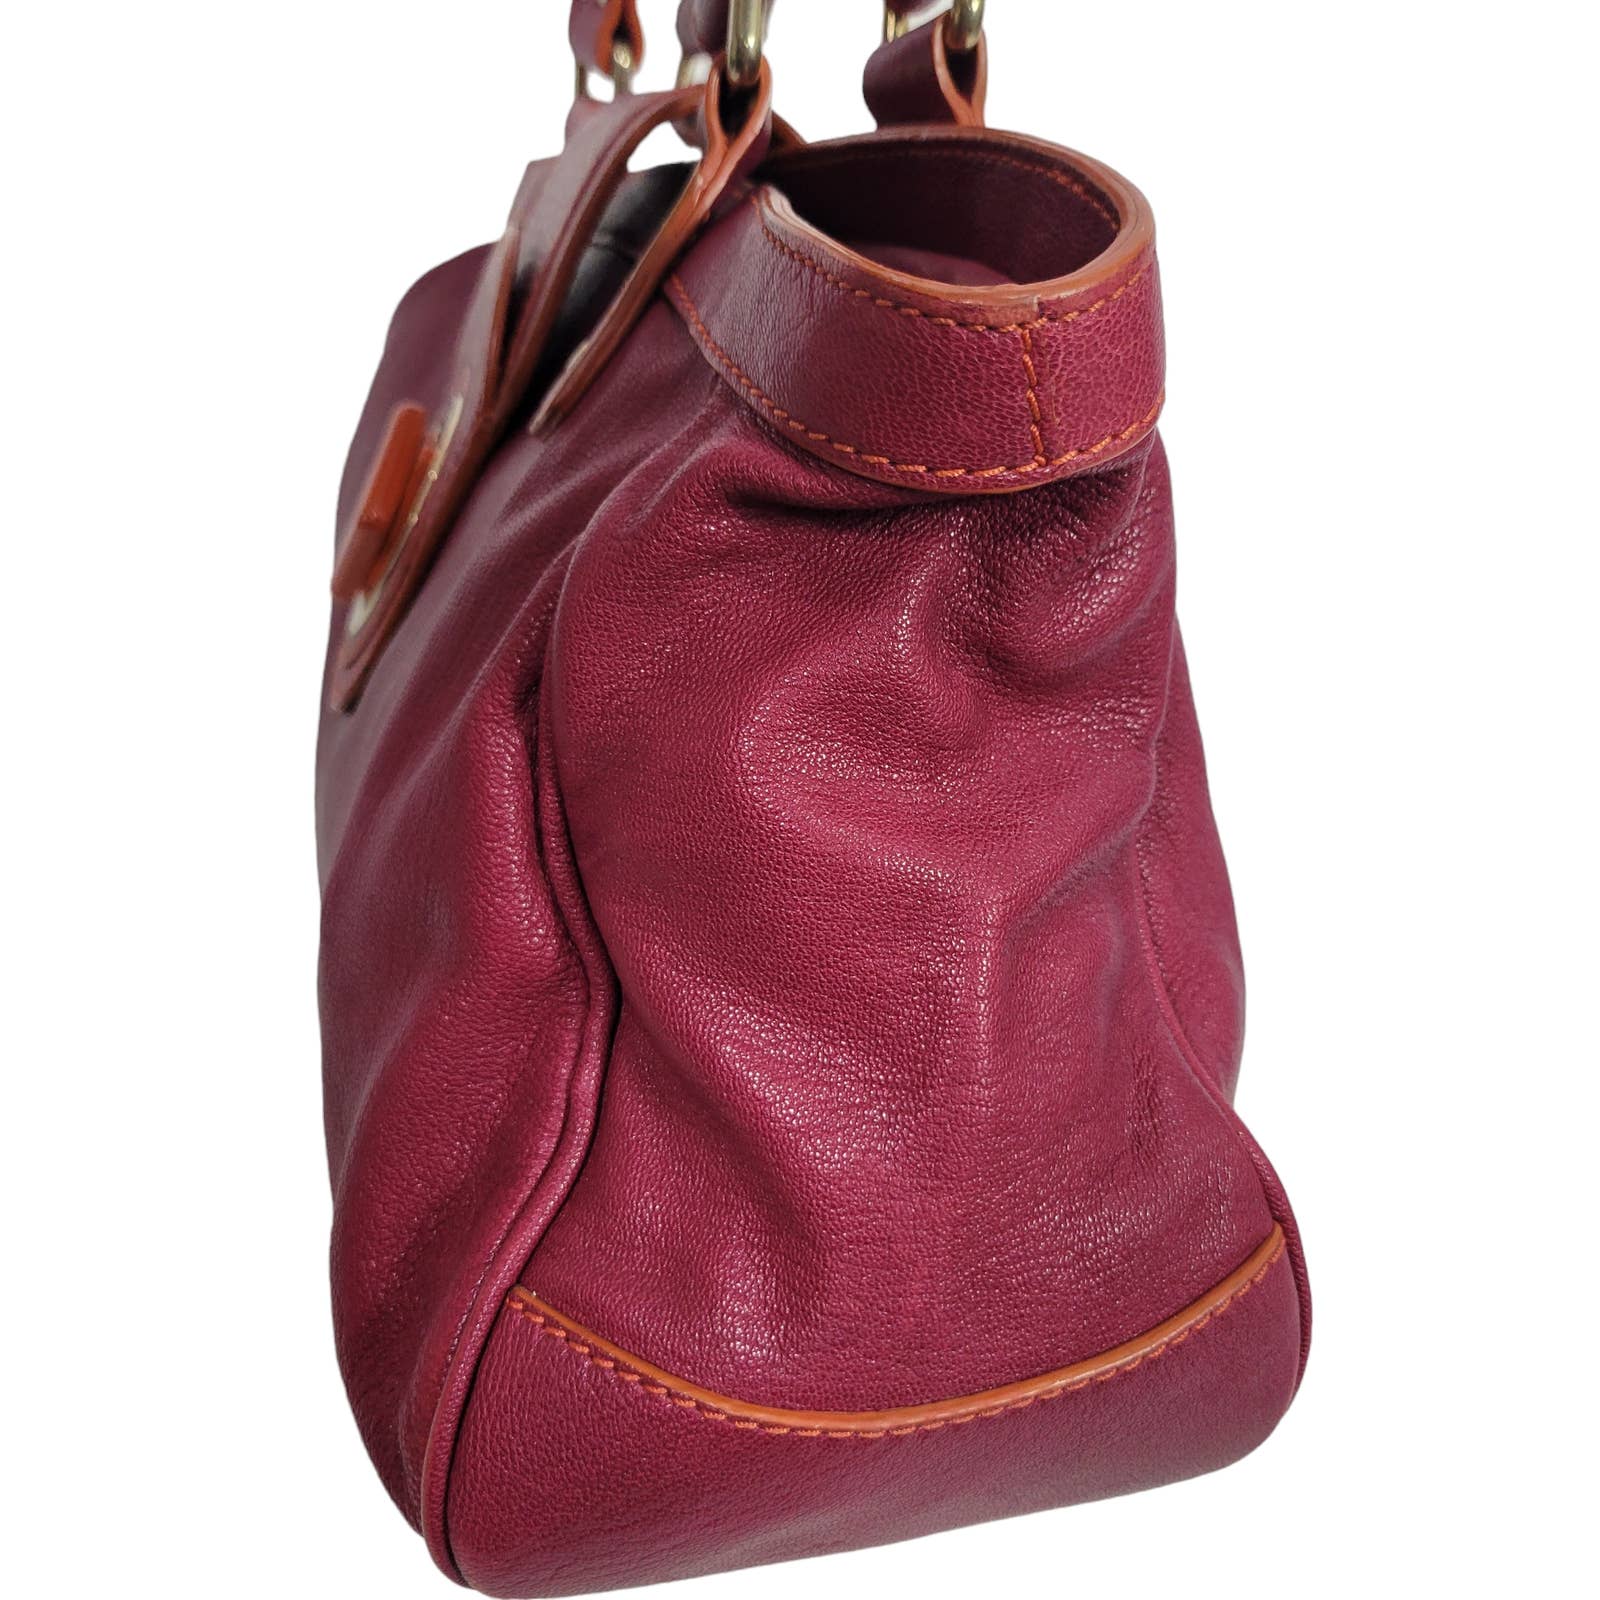 Etro Satchel Bag Pink Leather Shoulder Handles Color Block Tote Turn Lock Purse